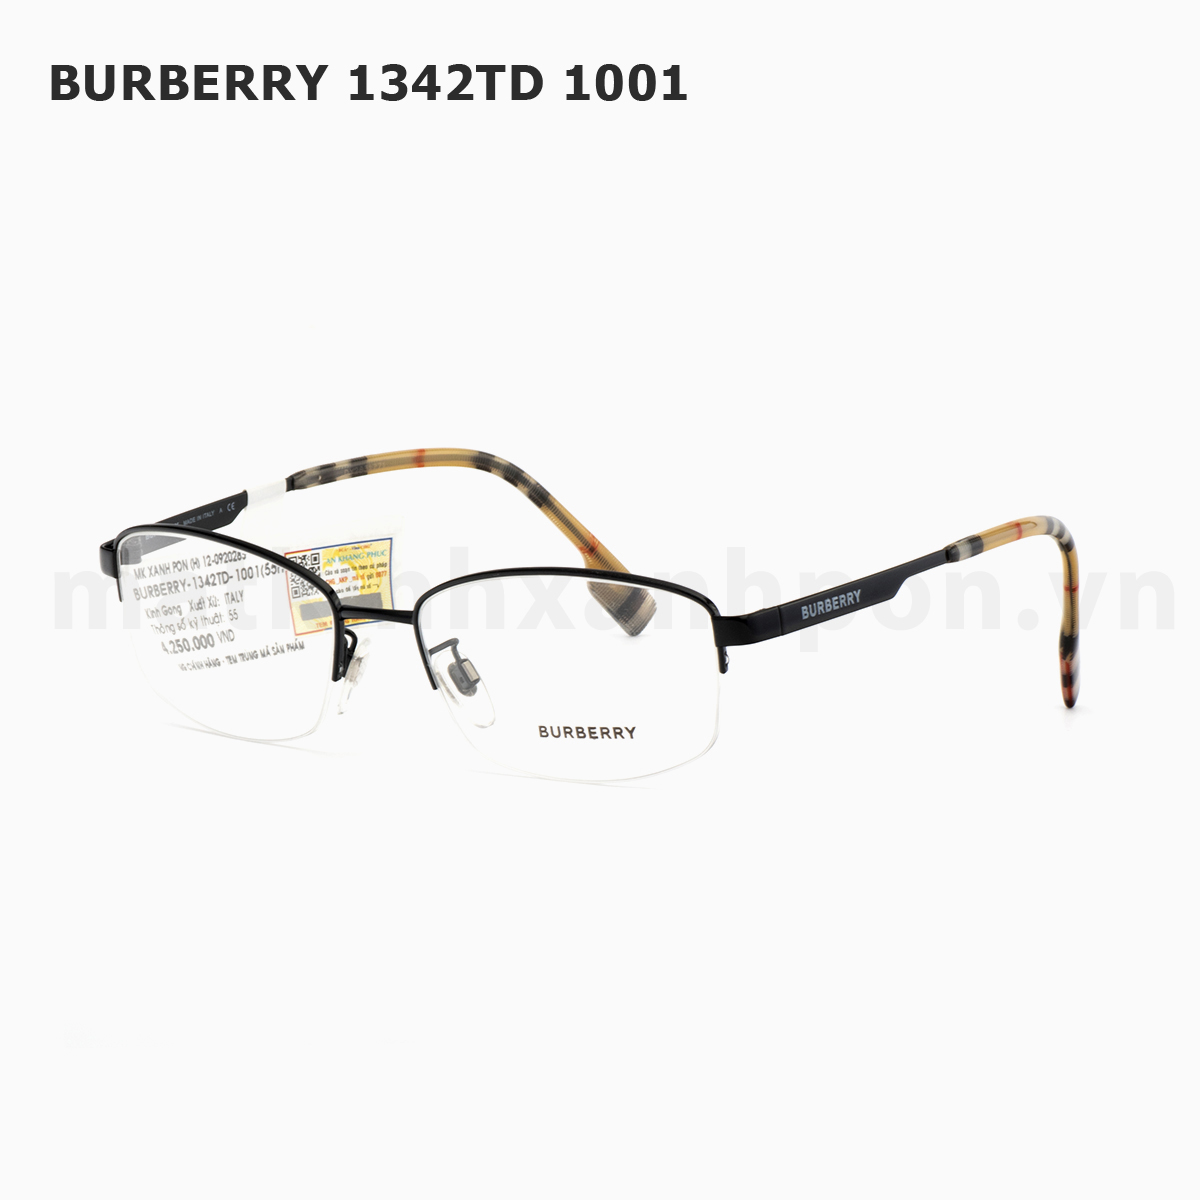 Burberry 1342TD 1001